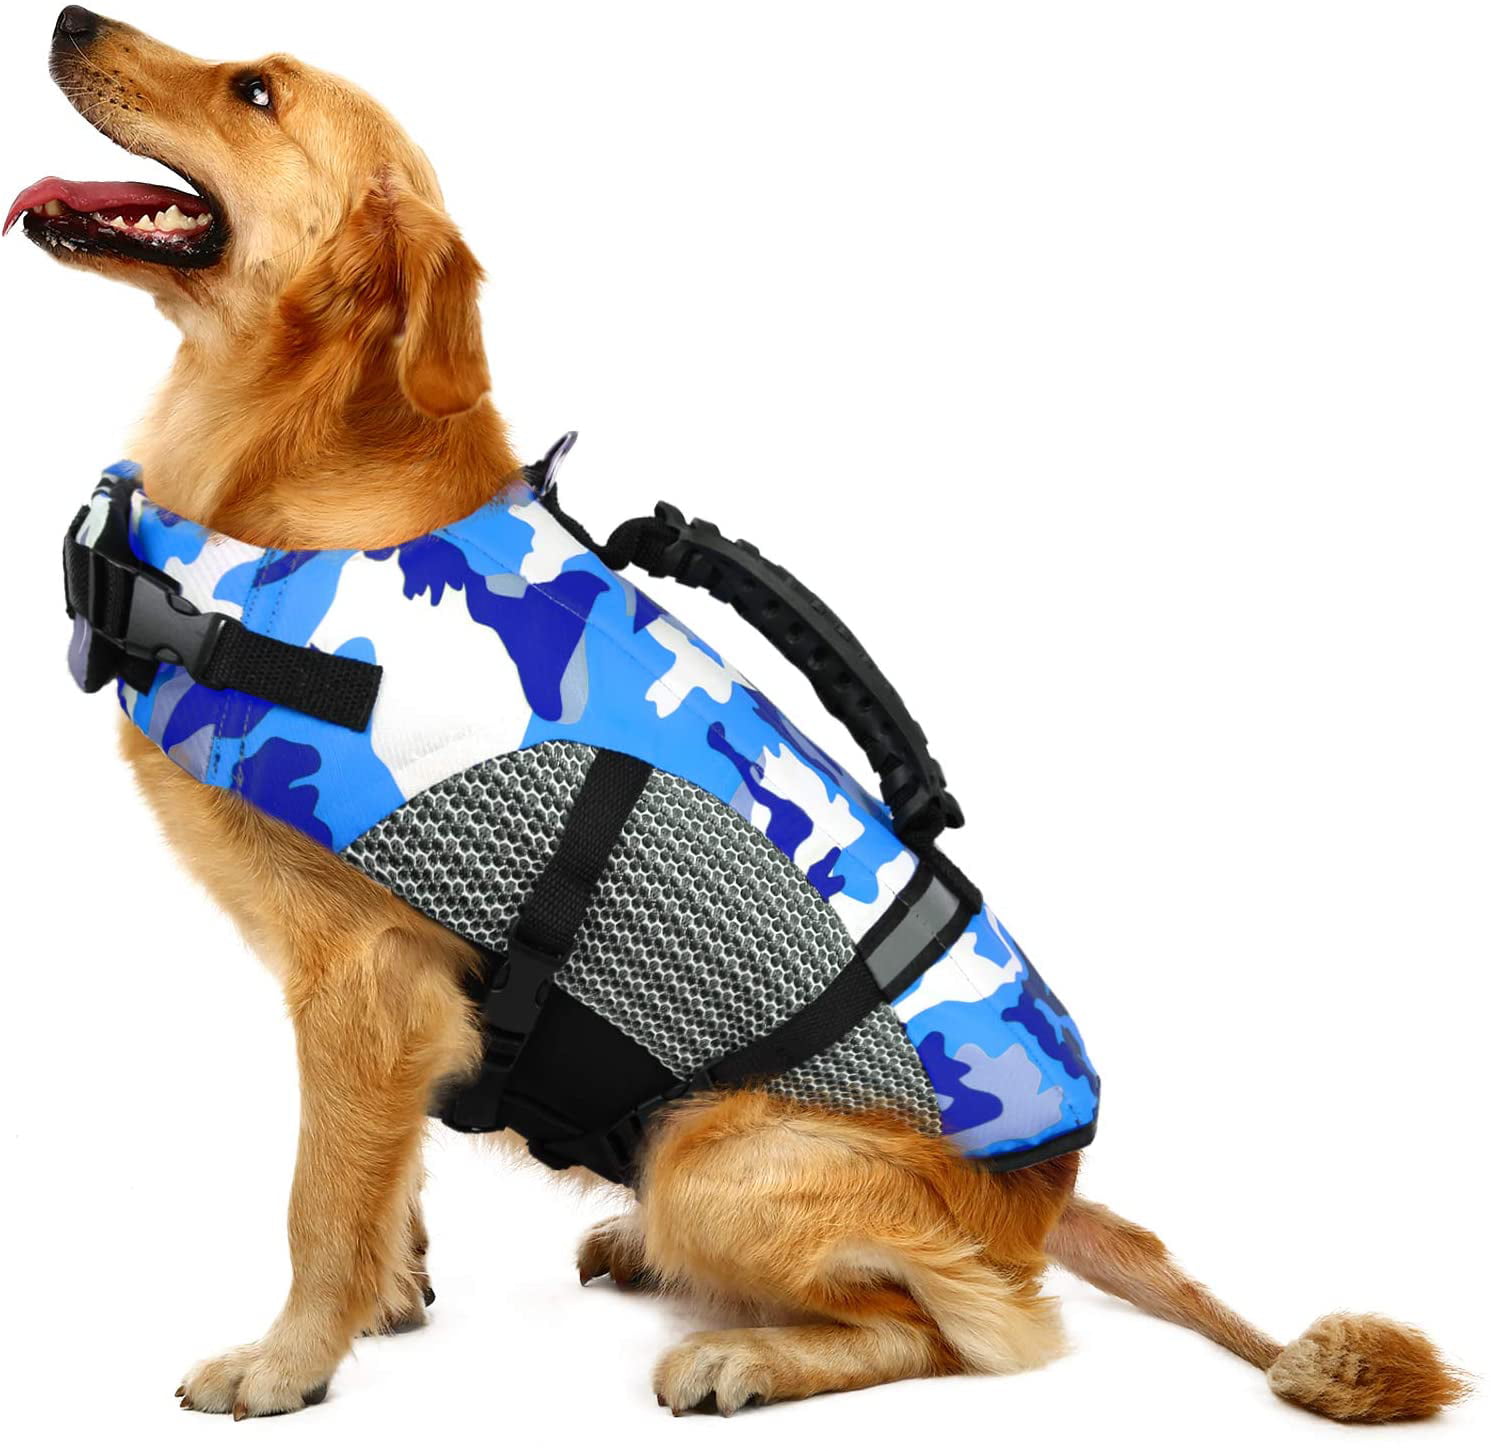 P/D Puppy Pet Dog Saver Life Jacket Vest Preserver Large Swimming Safety XS-L US